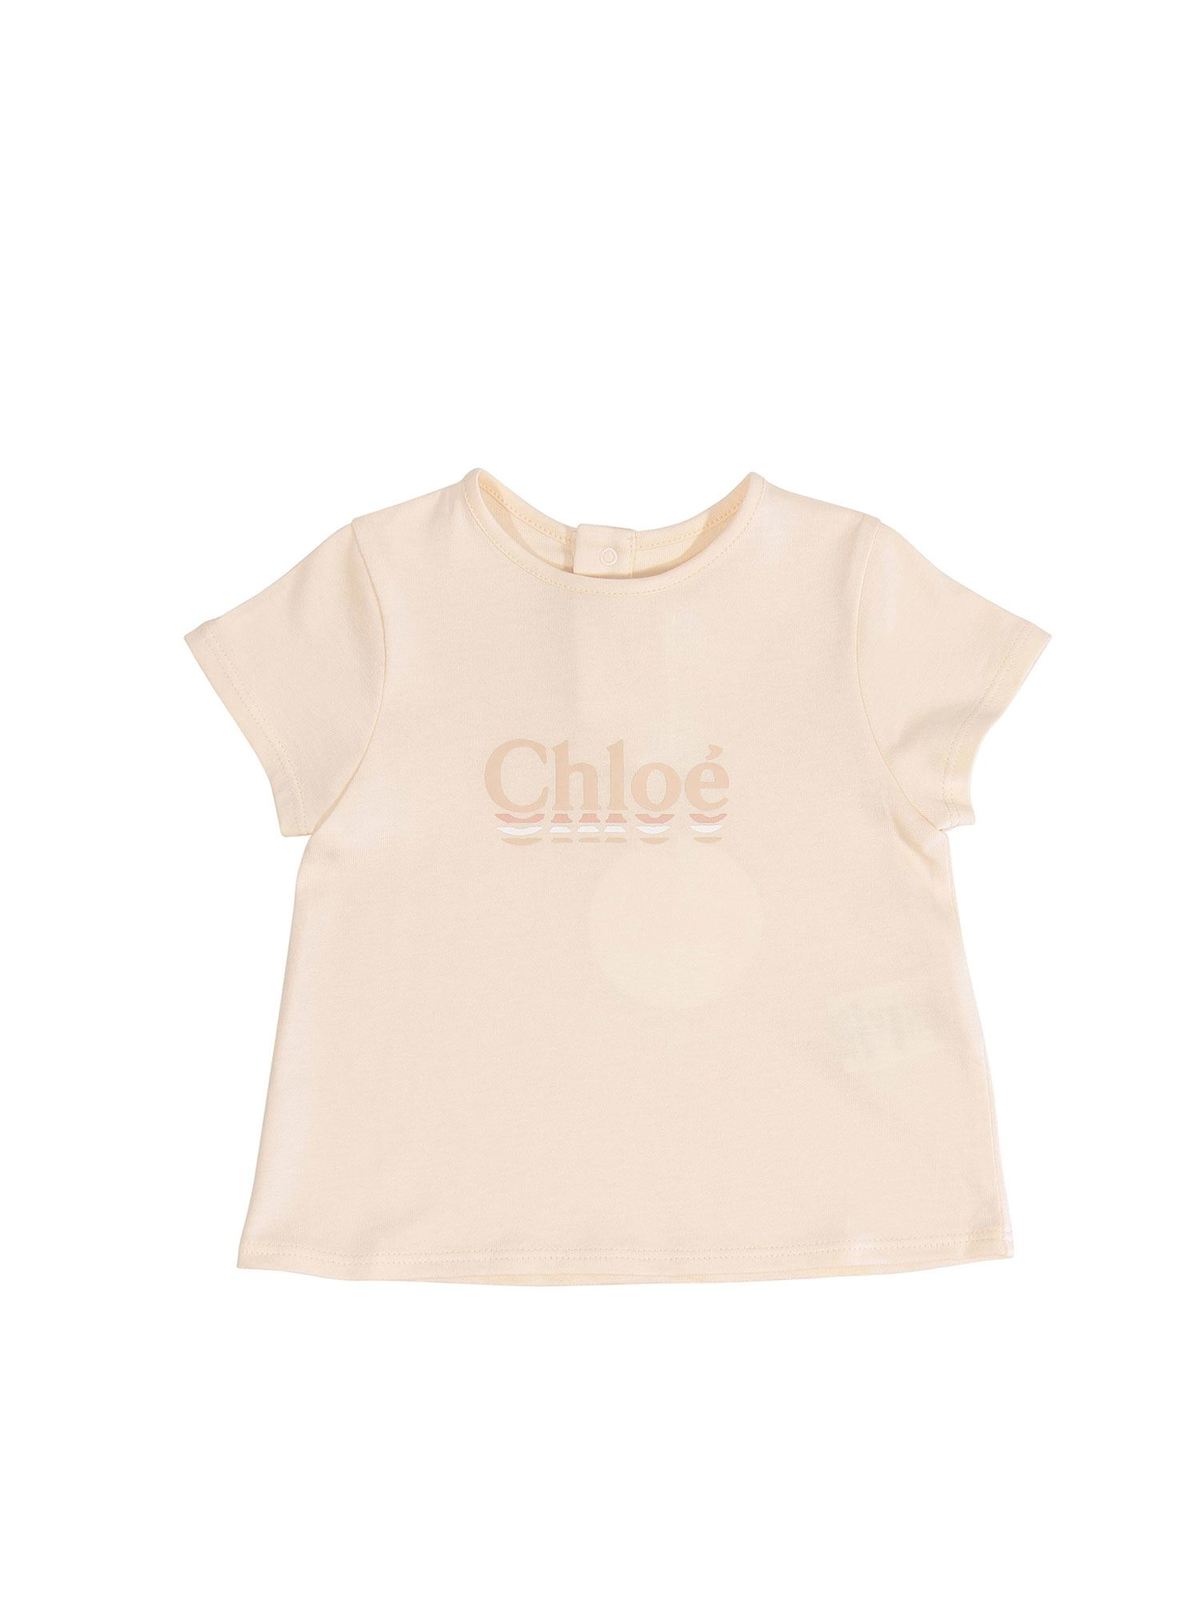 Tシャツ Chloe' - Tシャツ - ピンク - C0532944B | THEBS [iKRIX]